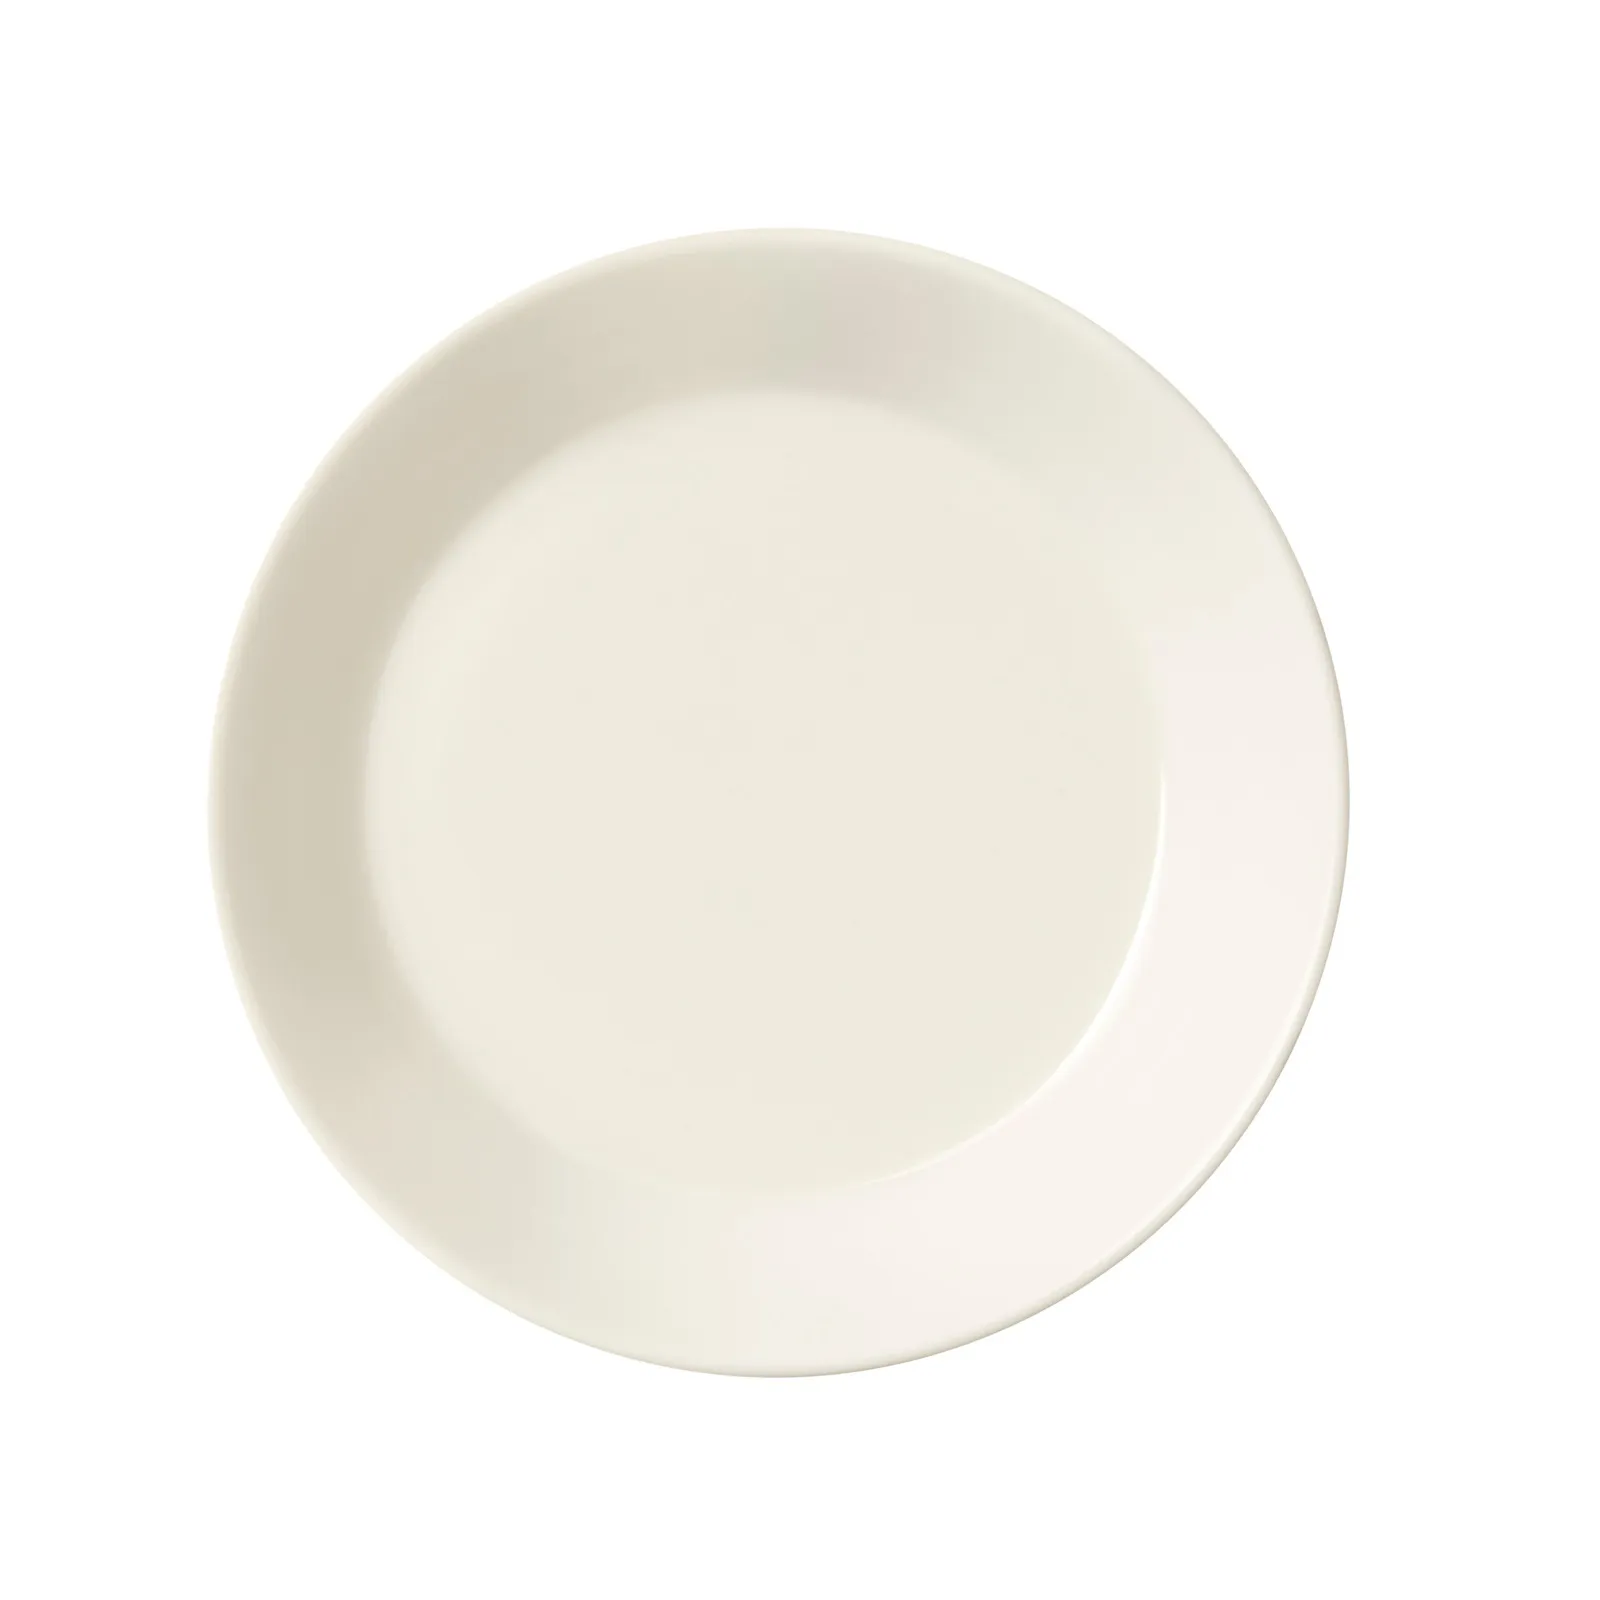 Teema plate Iittala 15cm white